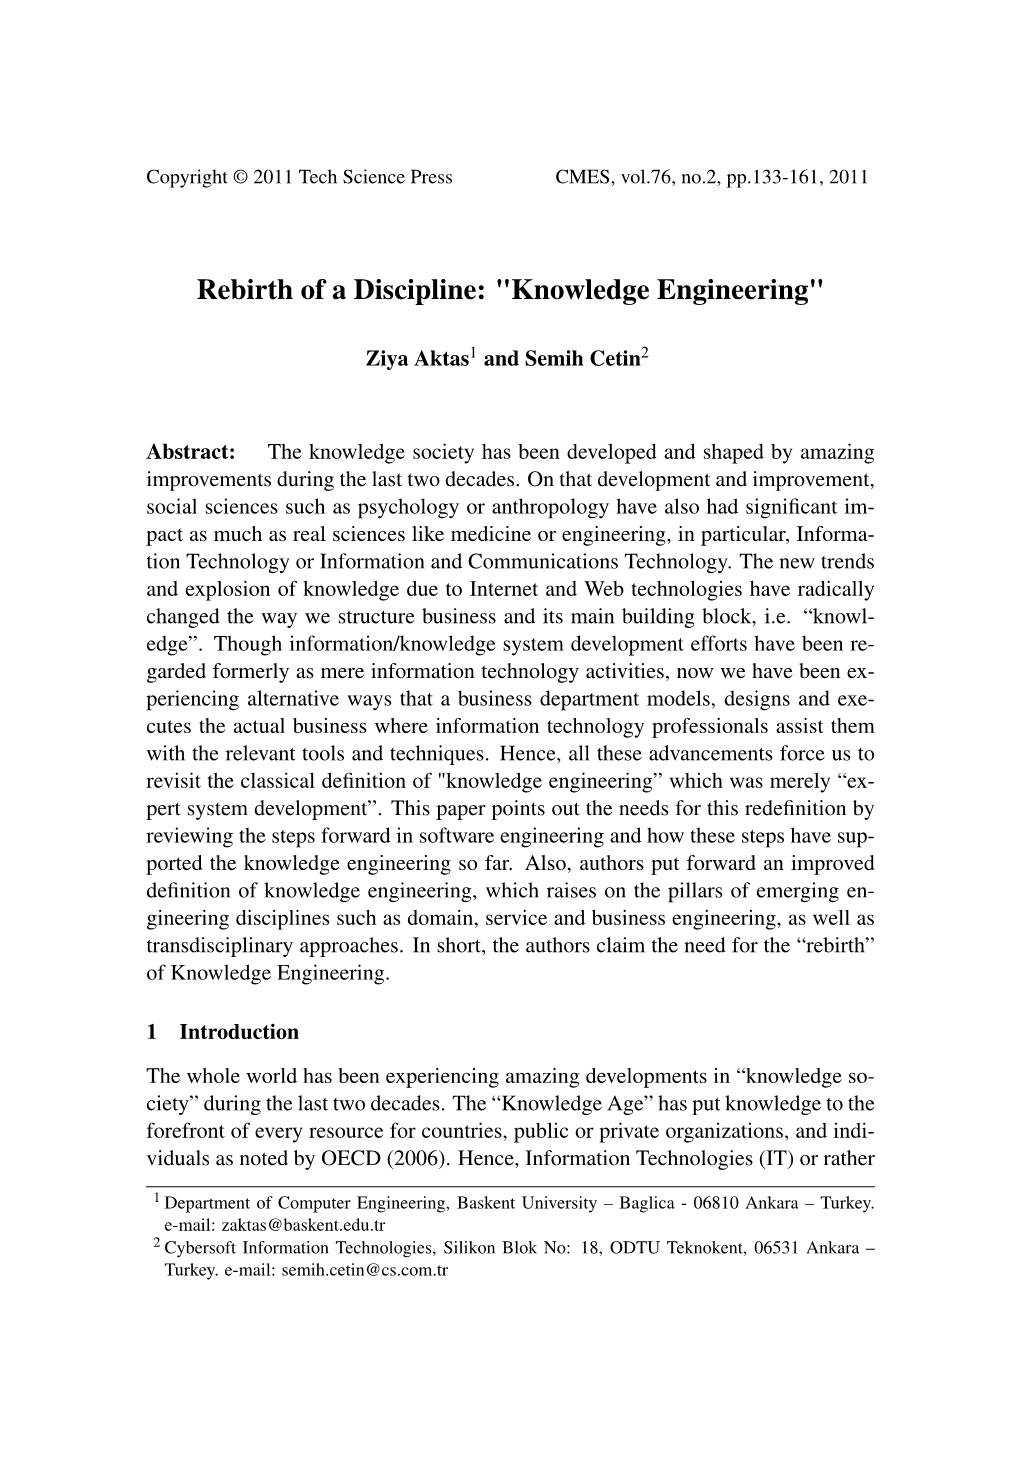 Rebirth of a Discipline: "Knowledge Engineering"